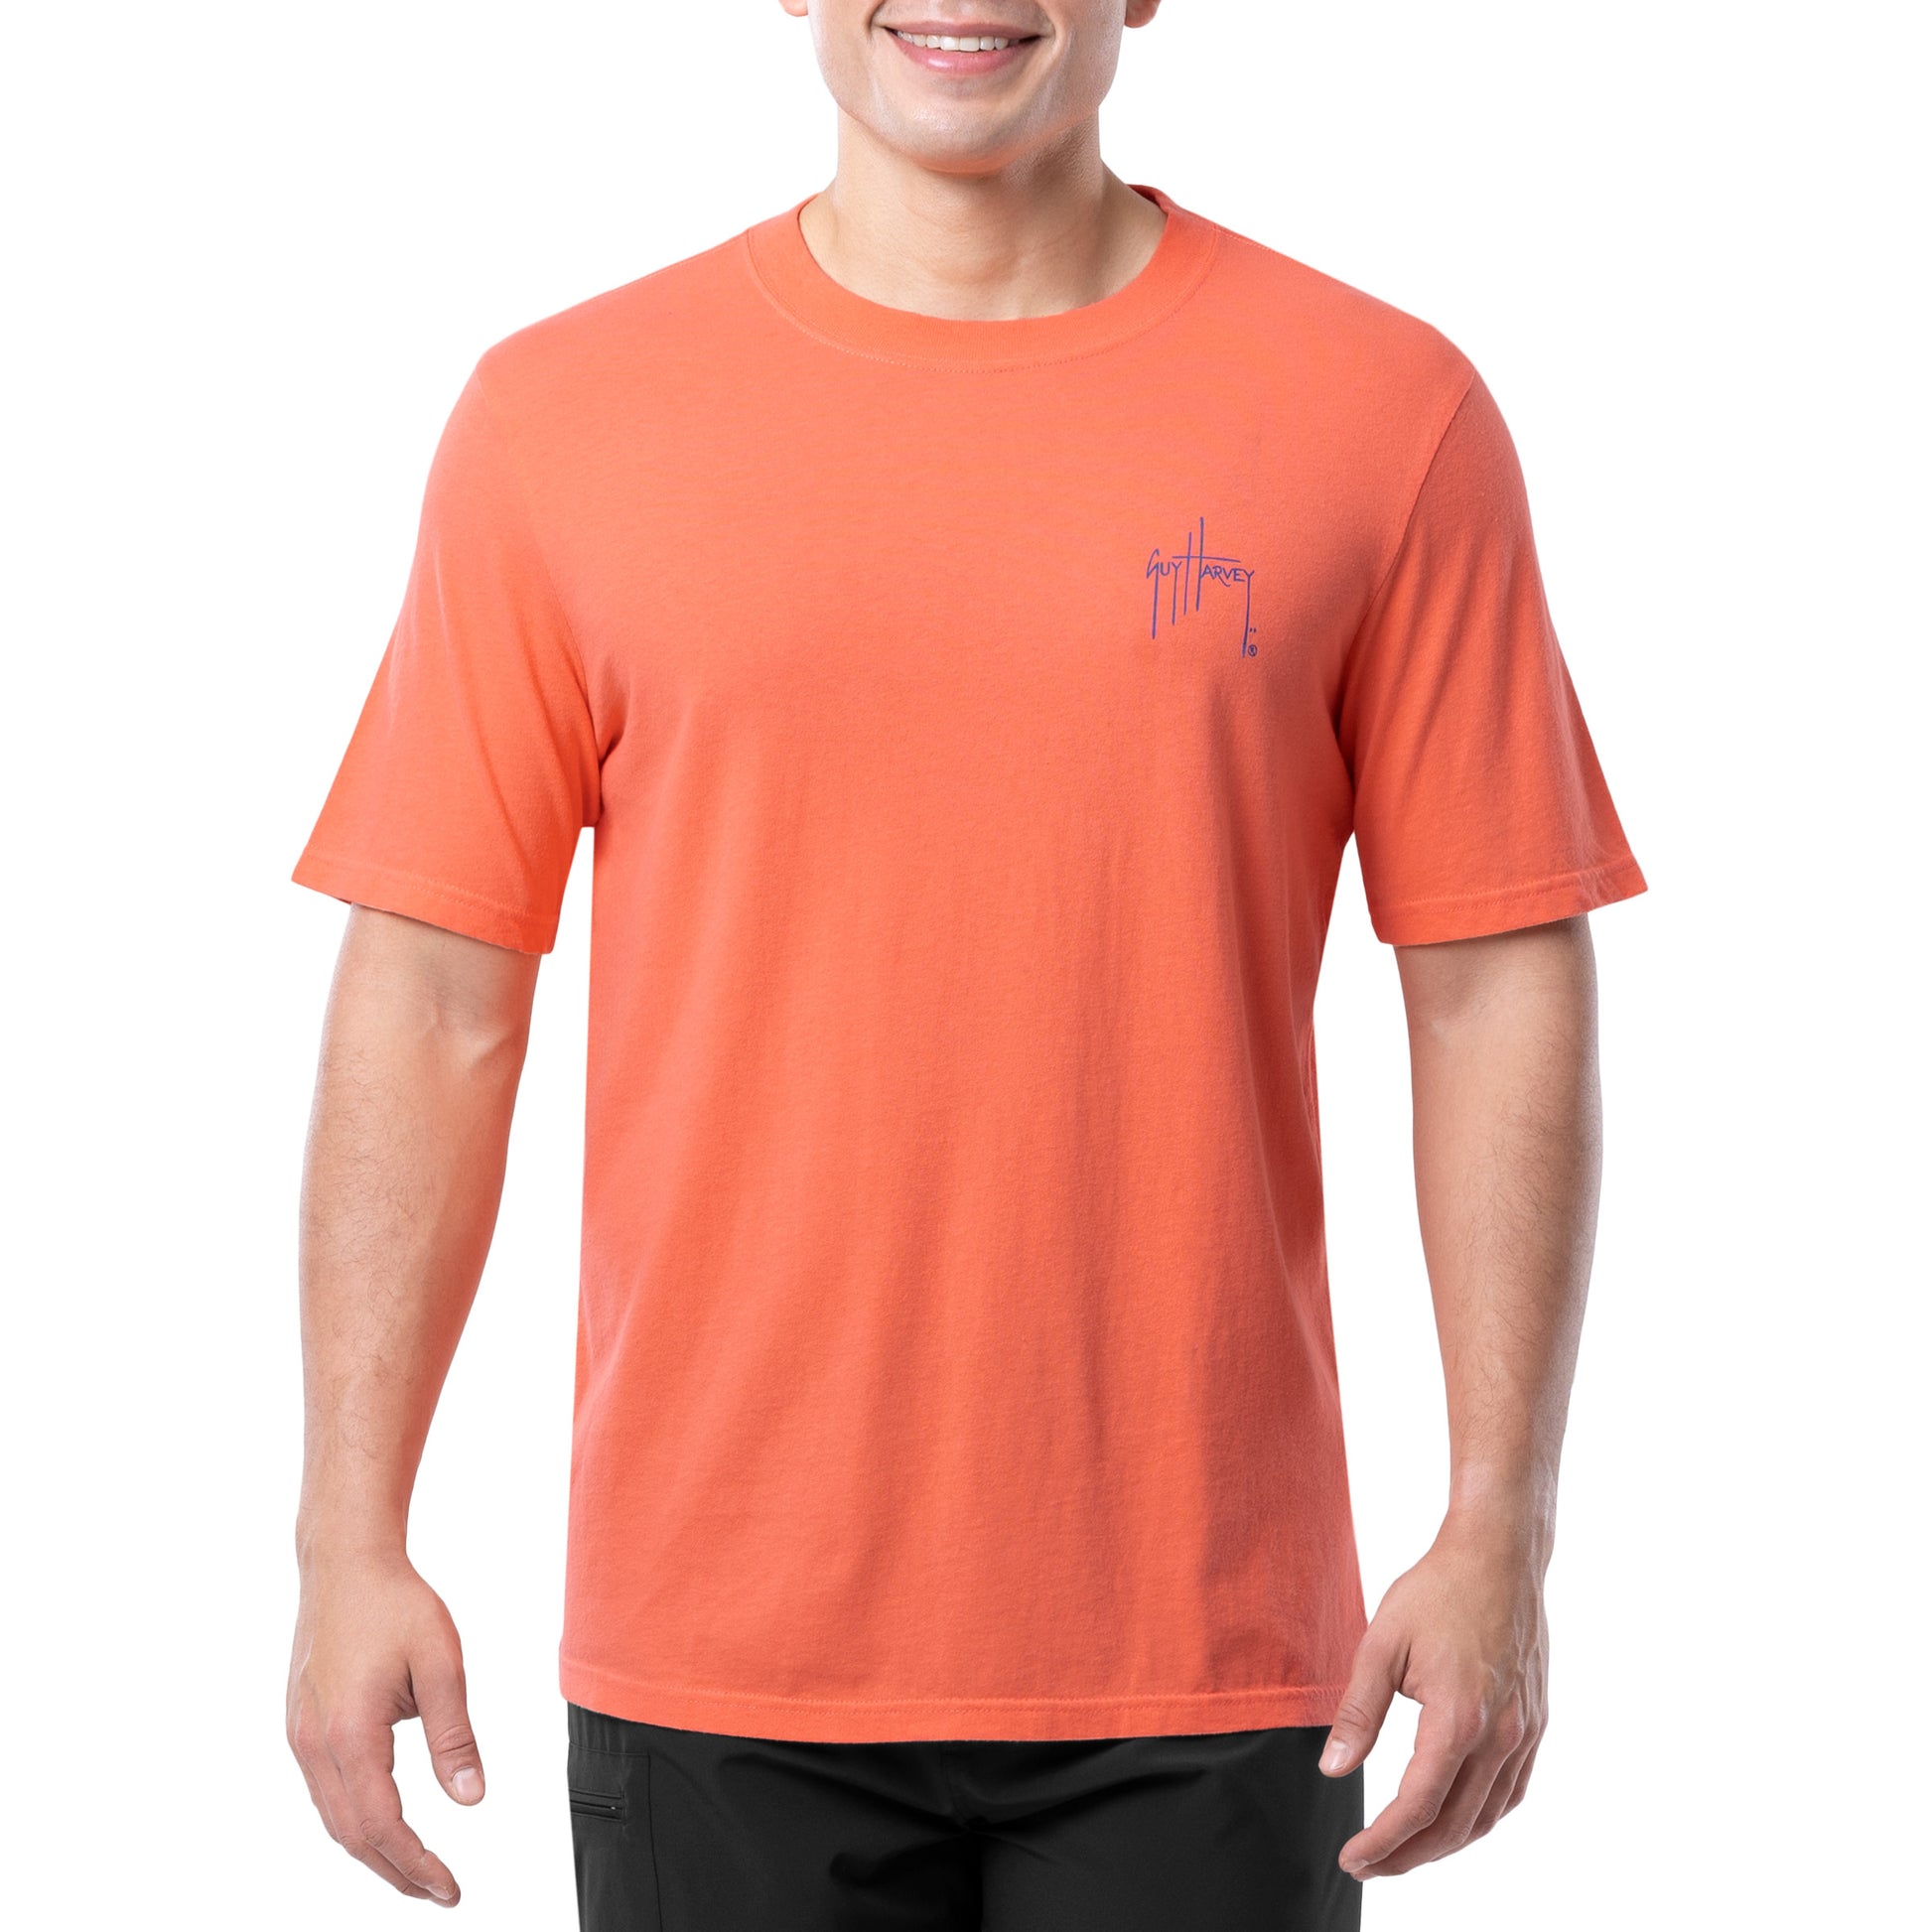 World Wide Sportsman Fishing Shirt Large Men's Short Sleeve Orange 100%  Nylon L